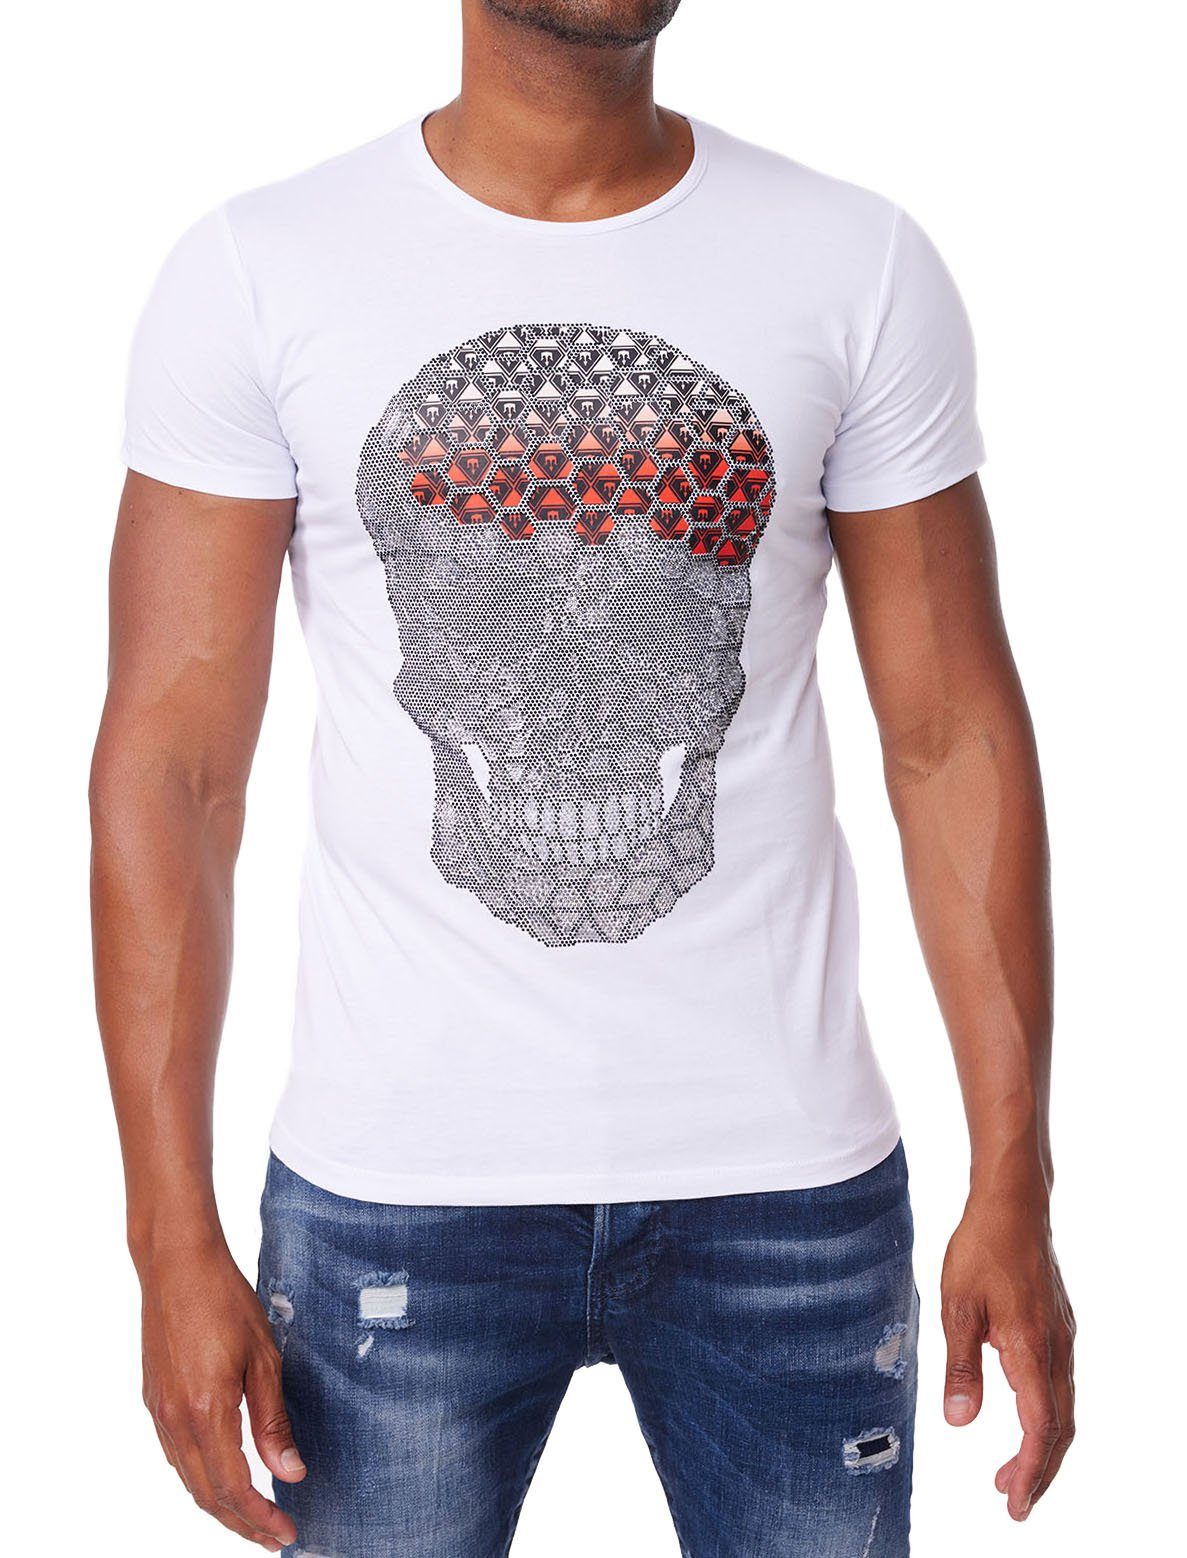 TRUENO T-Shirt Lässiges Herren Kurzarm T-Shirt mit besonderem Totenkopf Motiv